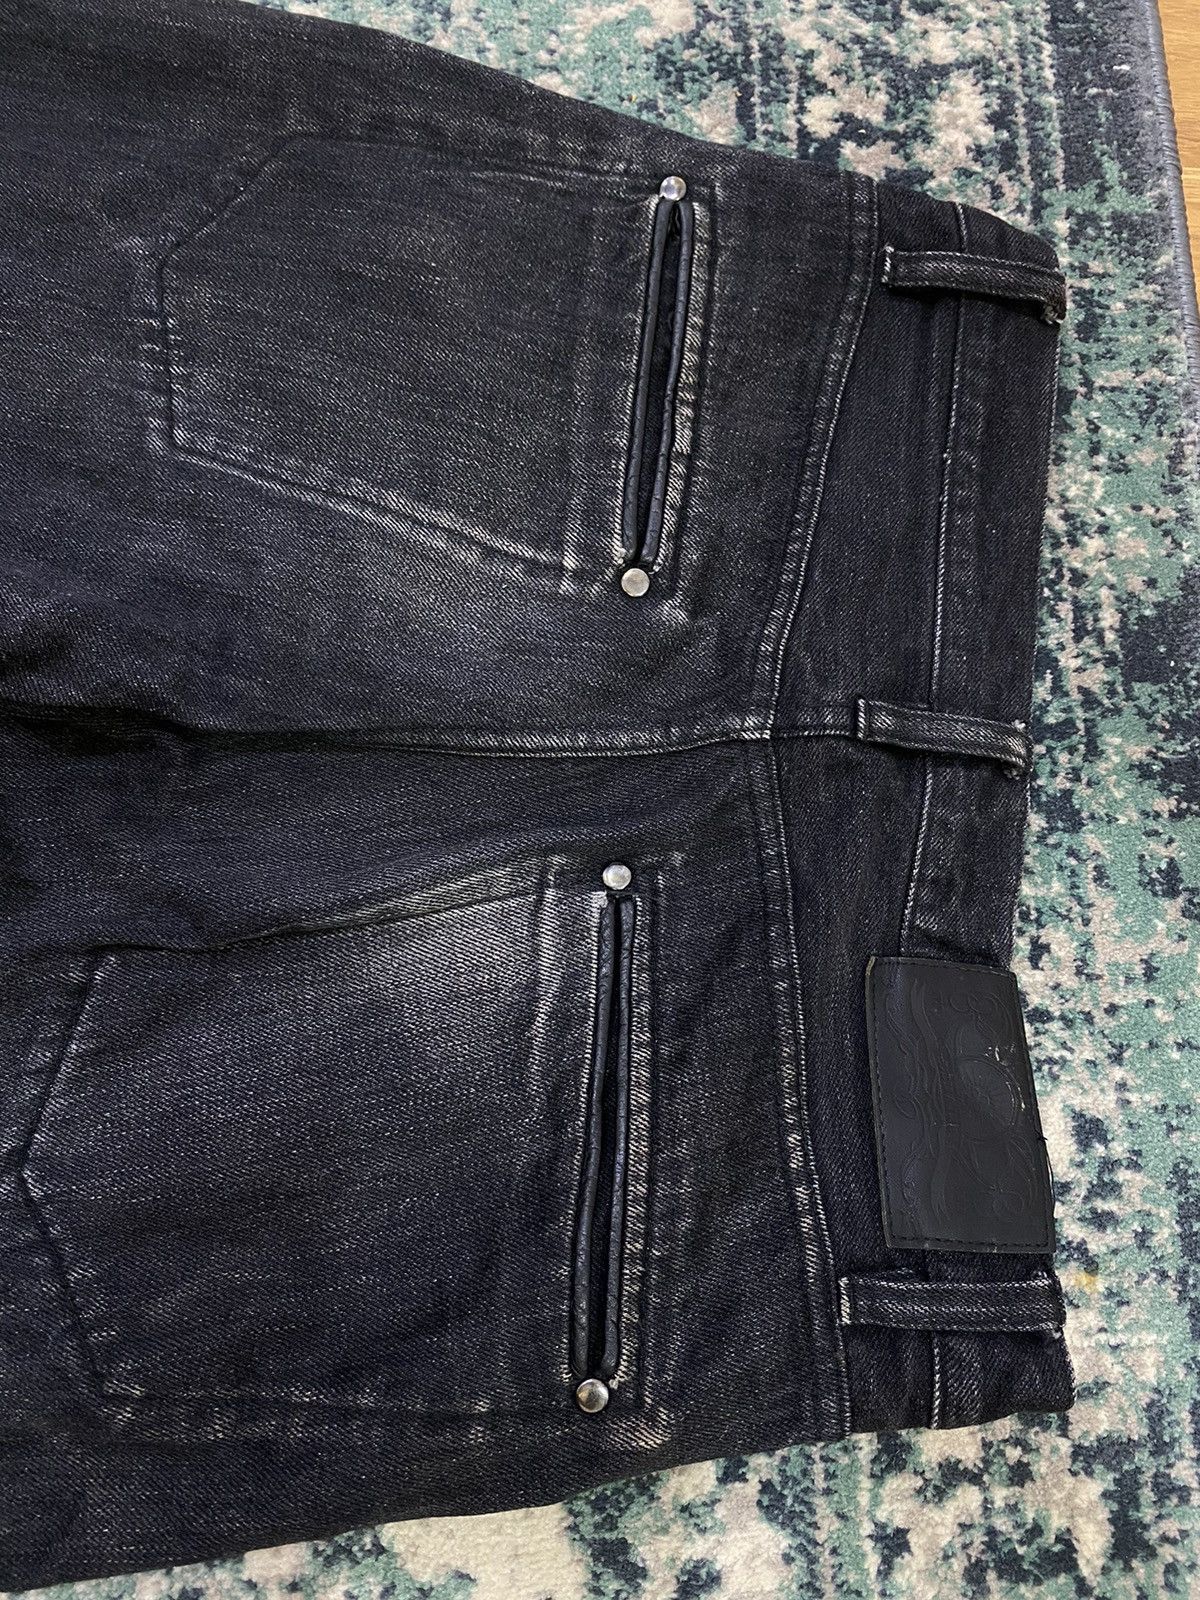 Lemaire Black Leather Lining Pocket Jeans - 12